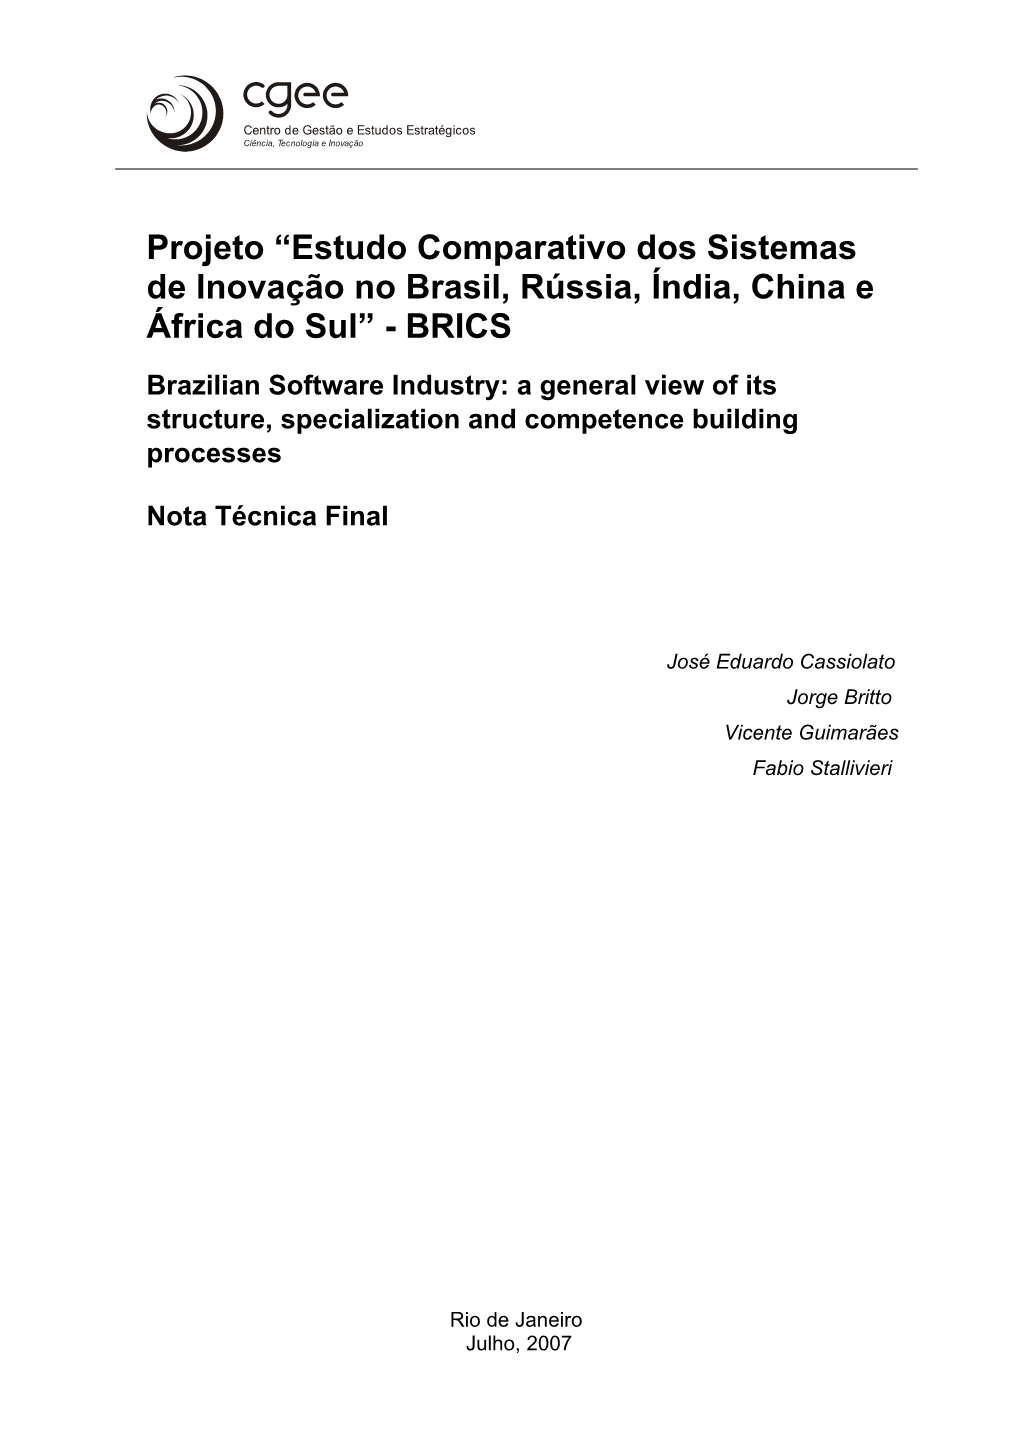 BRICS Brazilian Software Industry